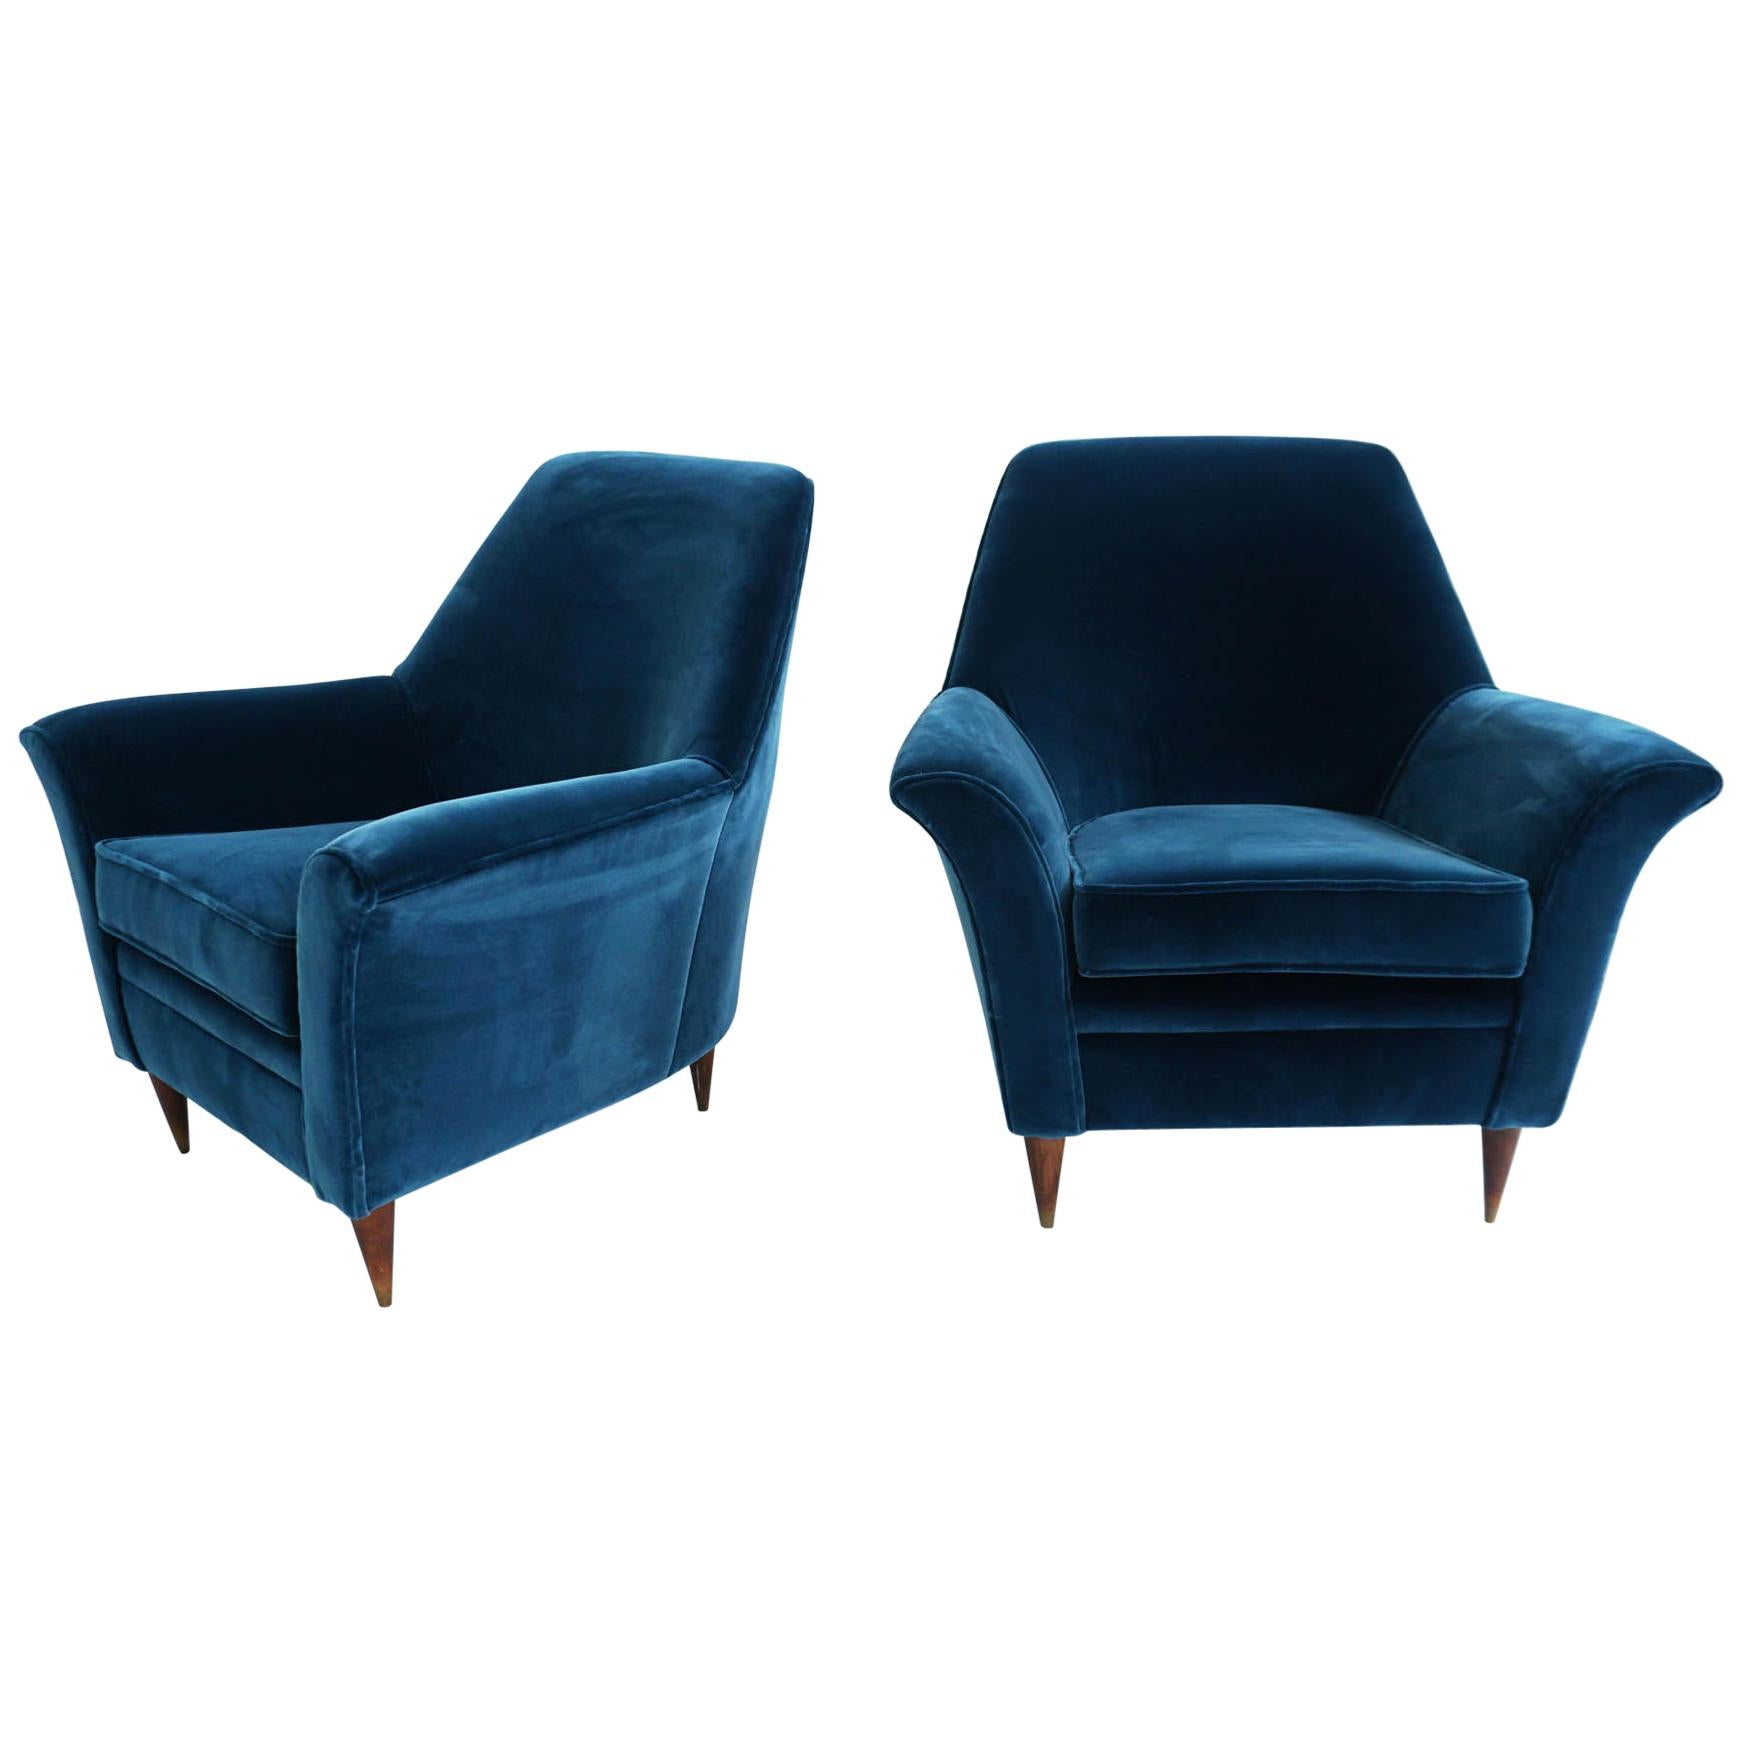 Ico Parisi Lounge Chairs in Blue Lagoon Velvet